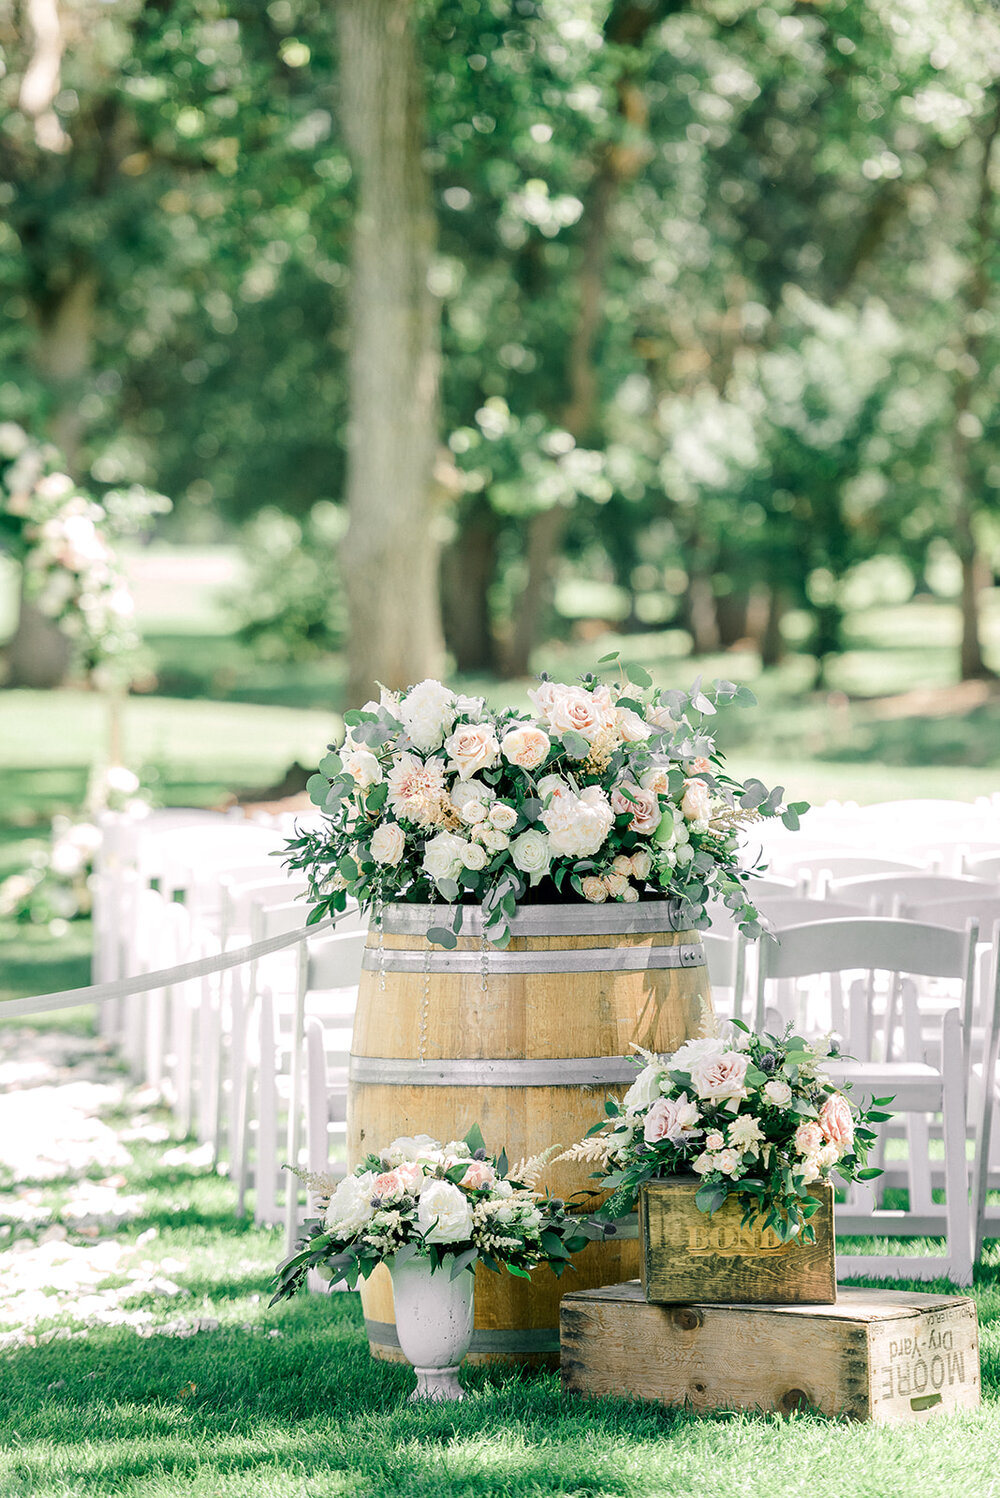 Violette-fleurs-roseville-napa-california-luxury-florist-silverado-resort-and-spa- weddings-by-scott-and-dana-ceremony-aisle-accent-decor-floral.jpg